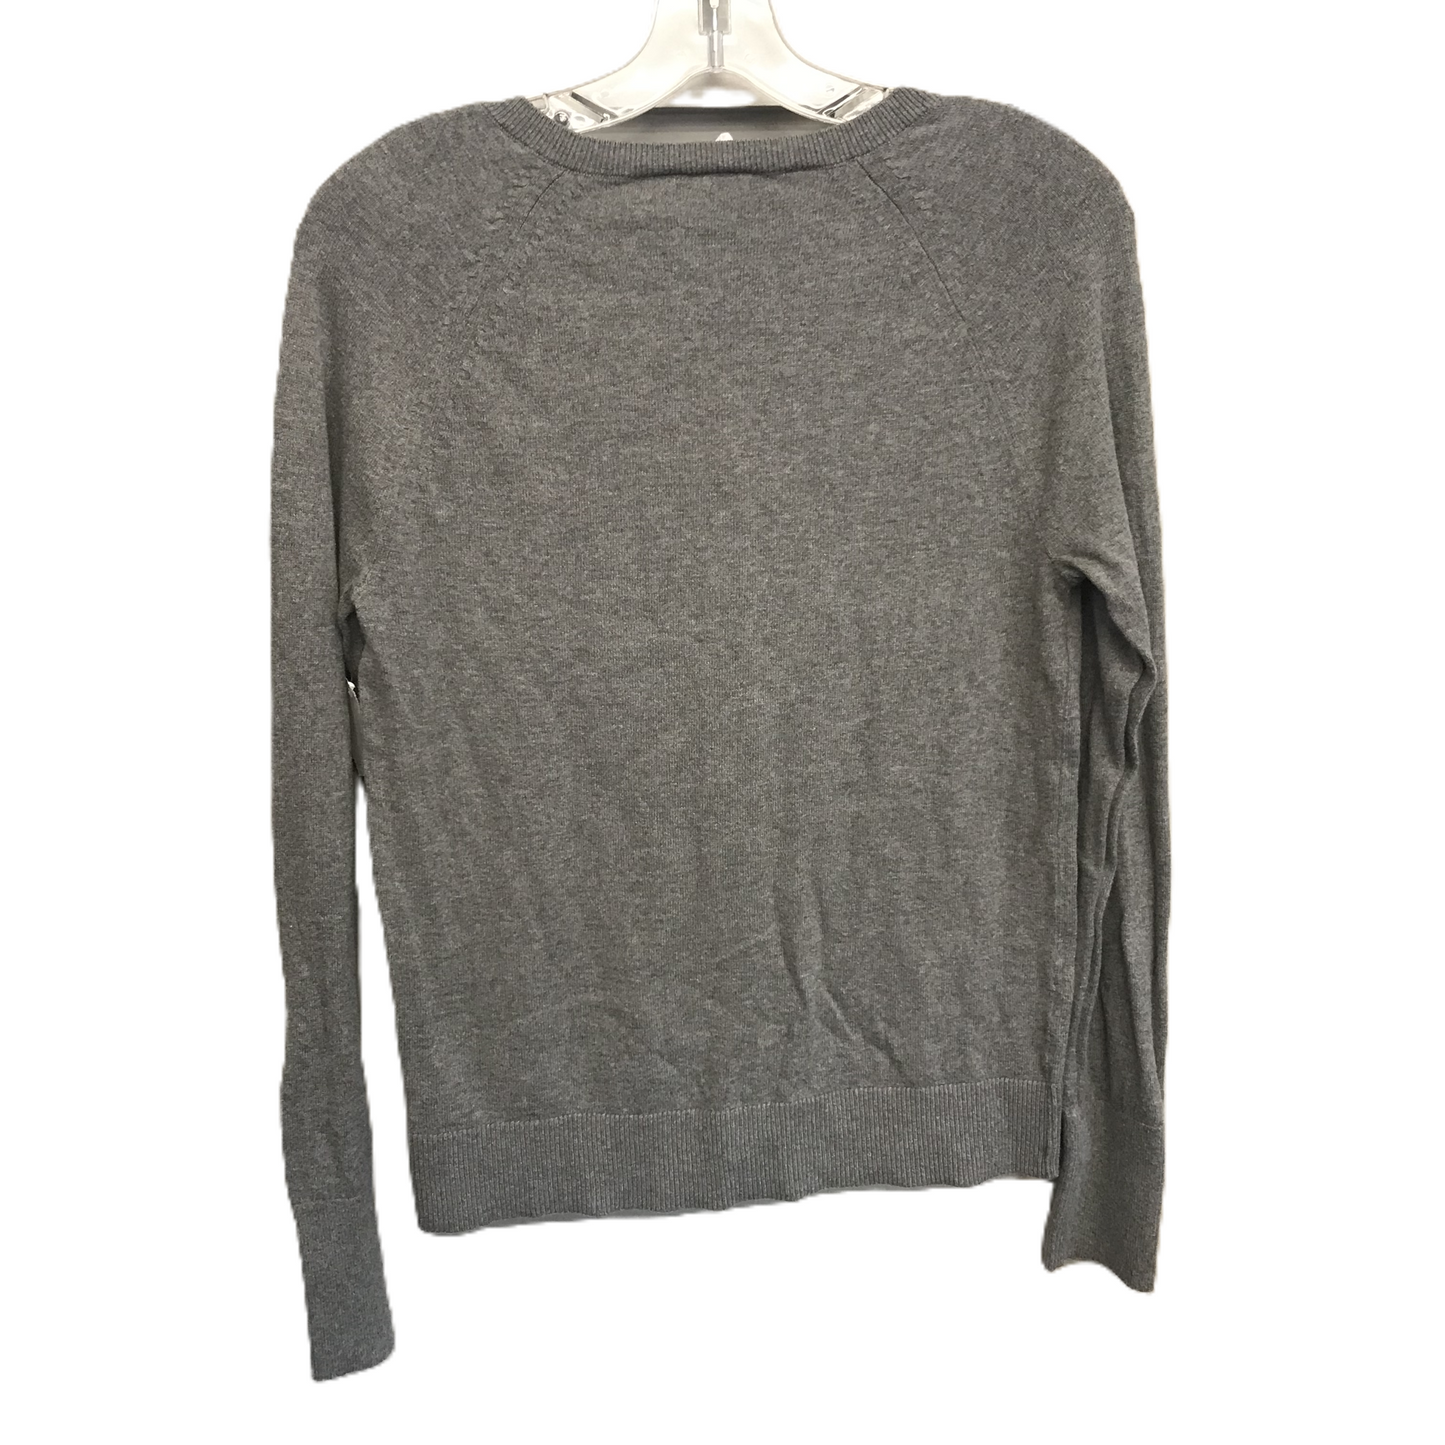 Grey Sweater Cardigan By Gap, Size: S